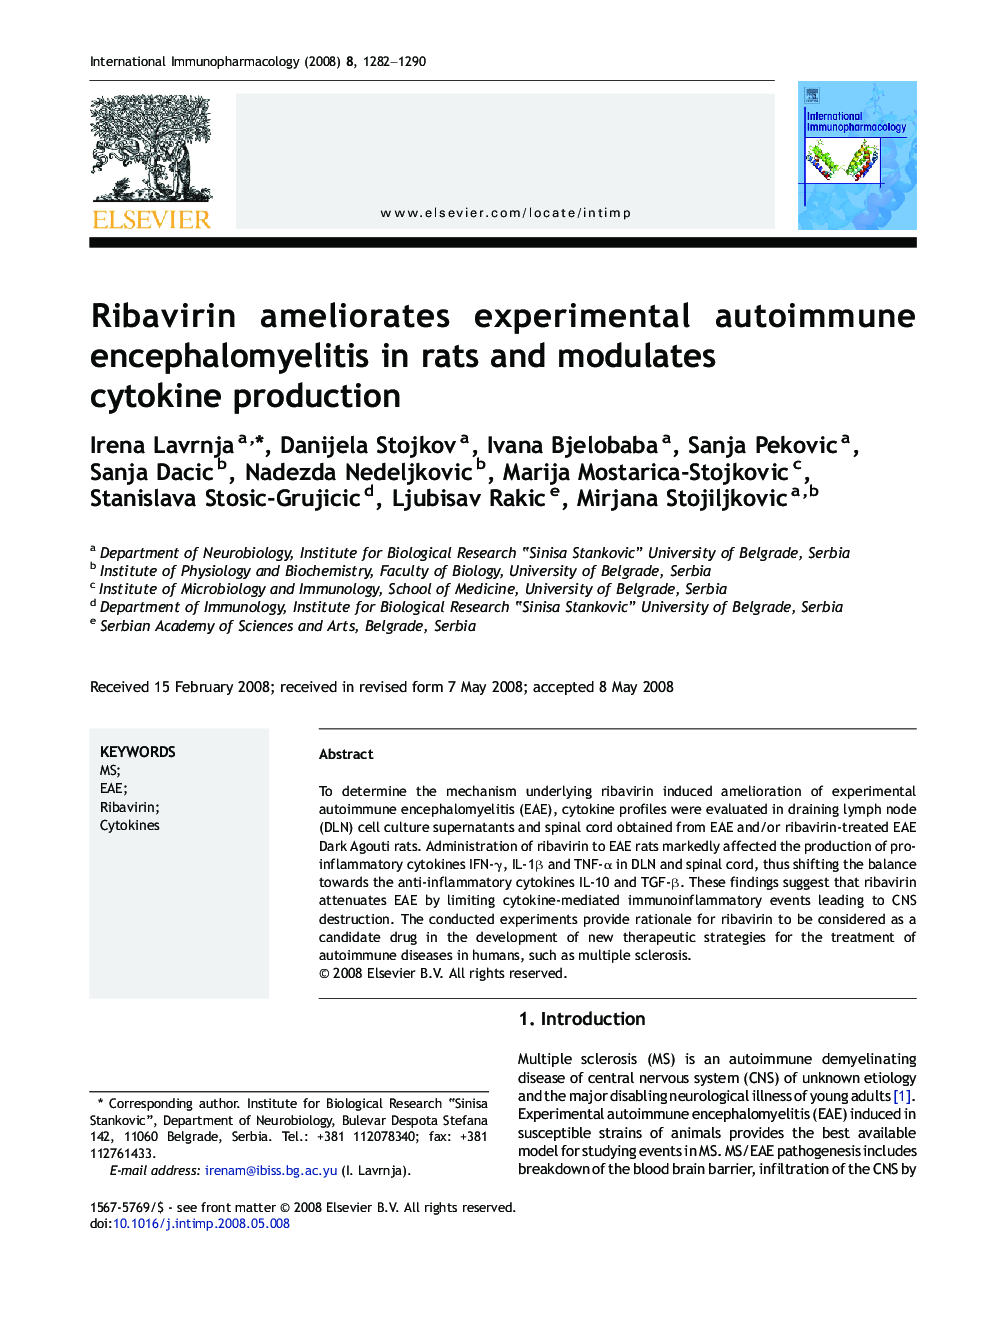 Ribavirin ameliorates experimental autoimmune encephalomyelitis in rats and modulates cytokine production